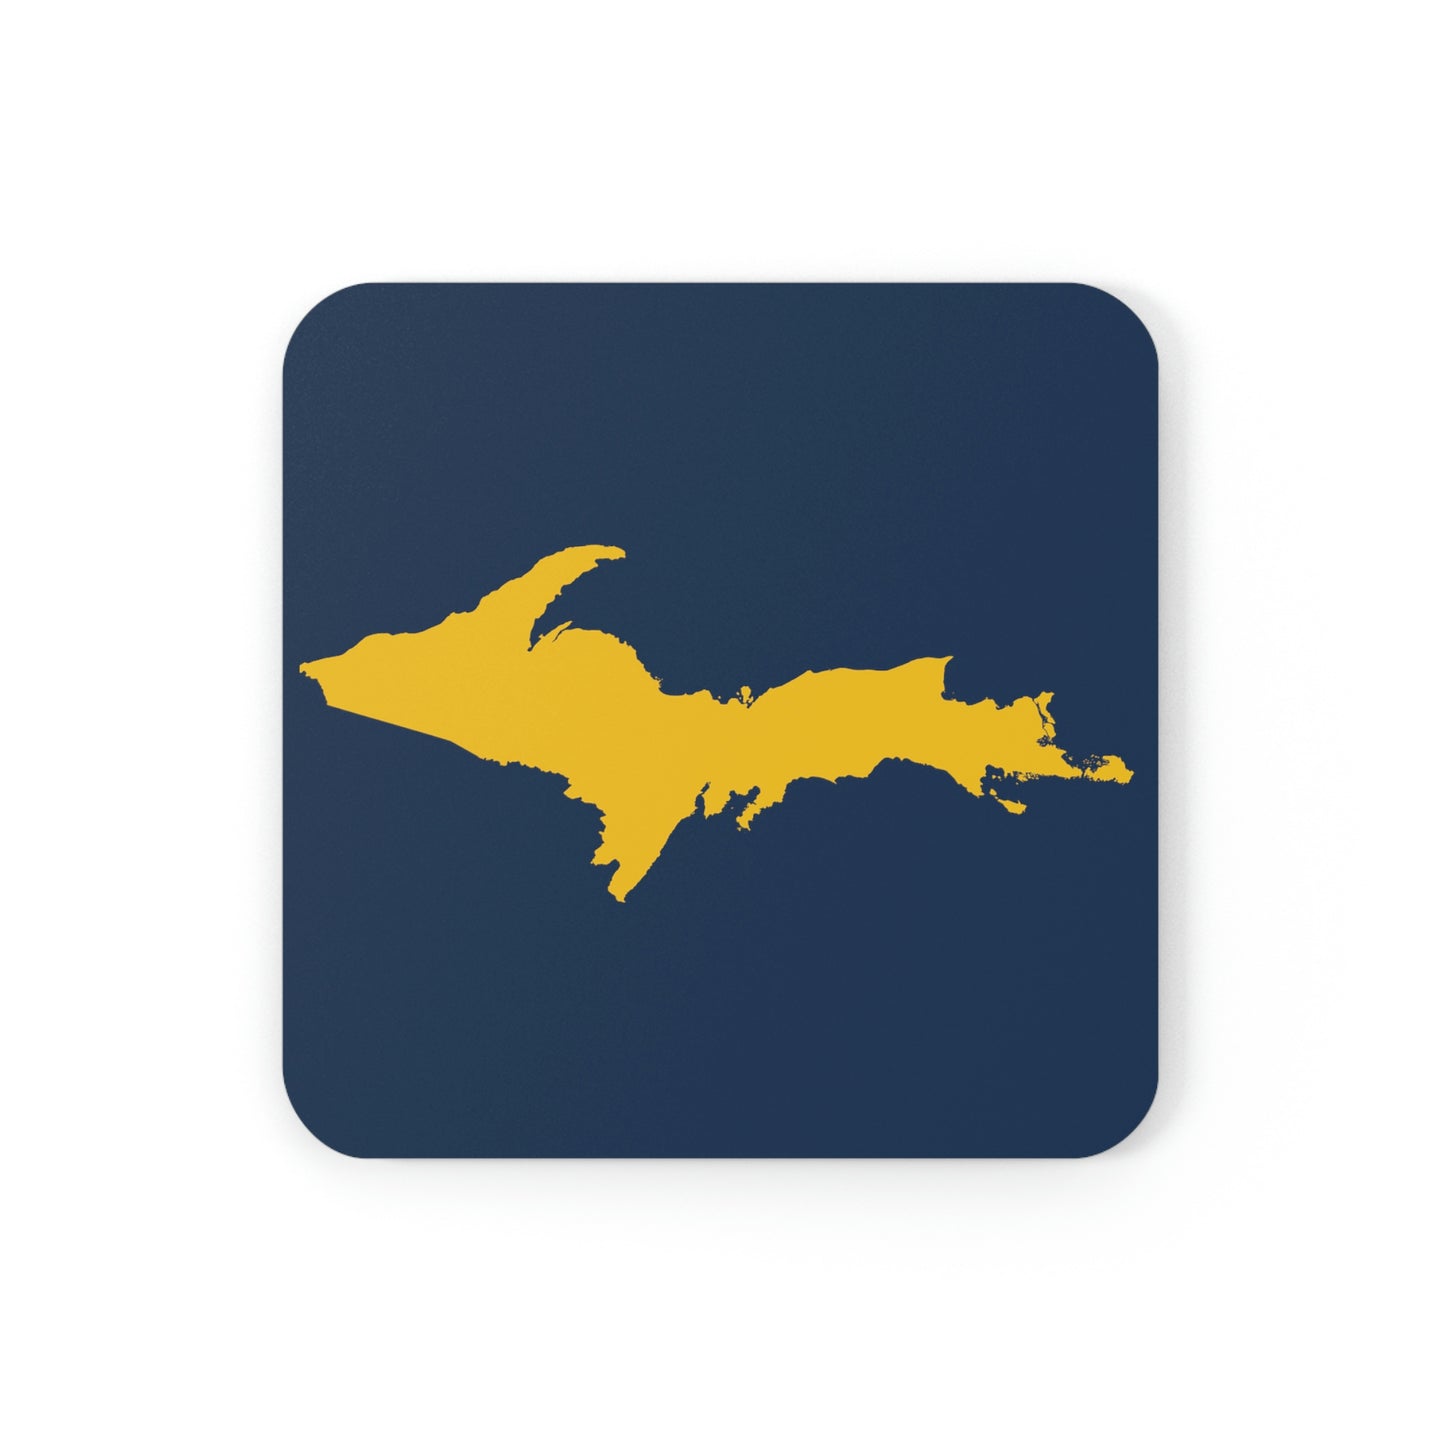 Michigan Upper Peninsula Coaster Set (Navy w/ Gold UP Outline) | Corkwood - 4 pack